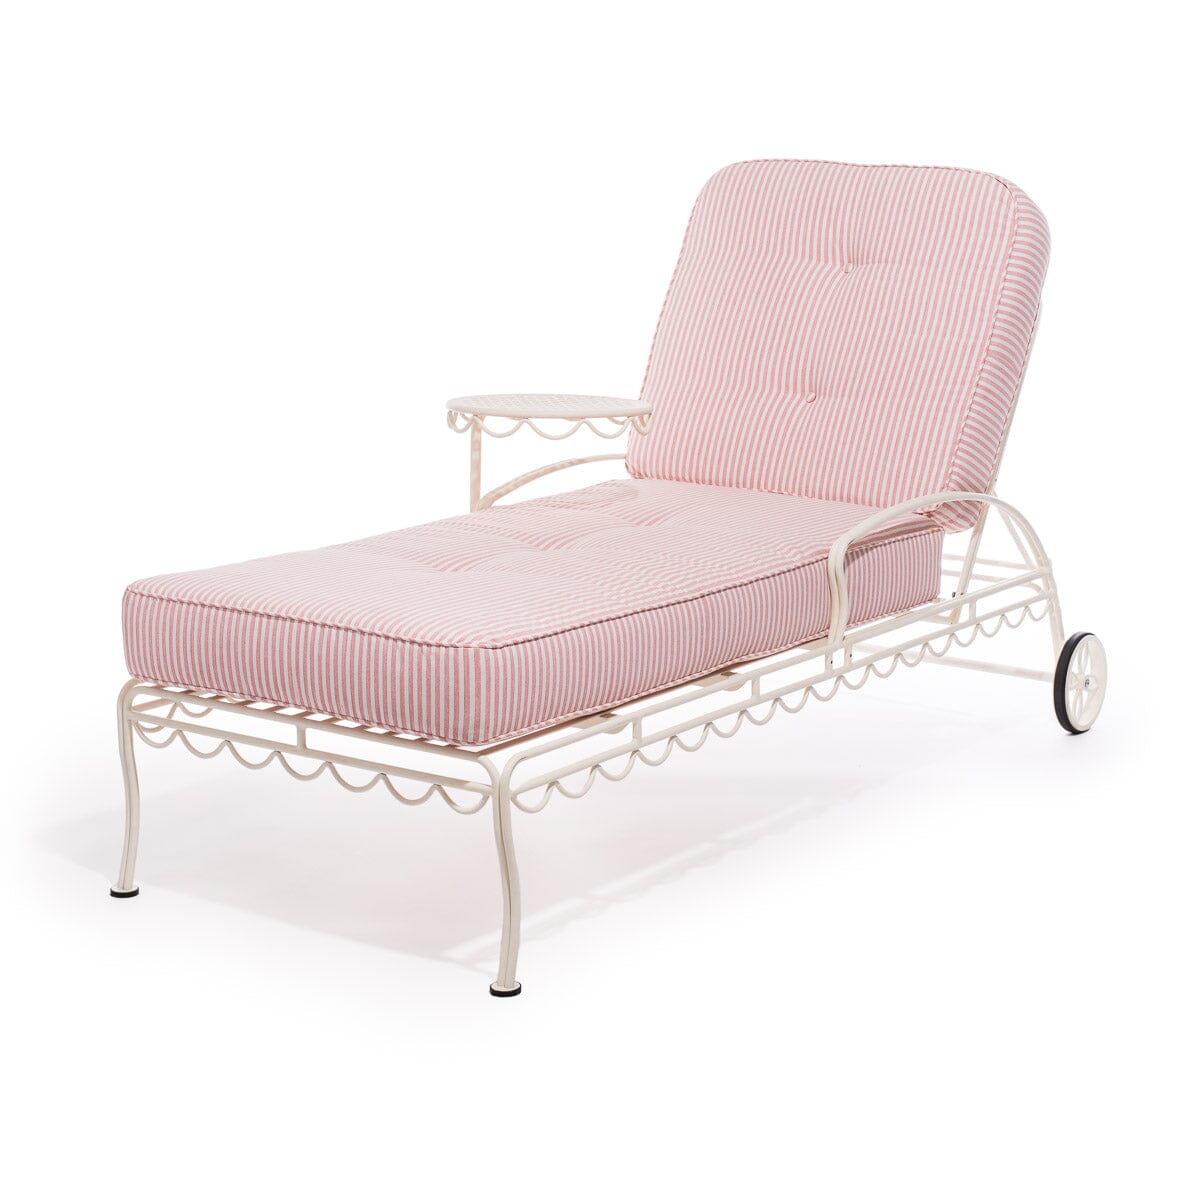 The Al Fresco Sun Lounger Cushion - Lauren's Pink Stripe Al Fresco Sun Lounger Cushions Business & Pleasure Co 